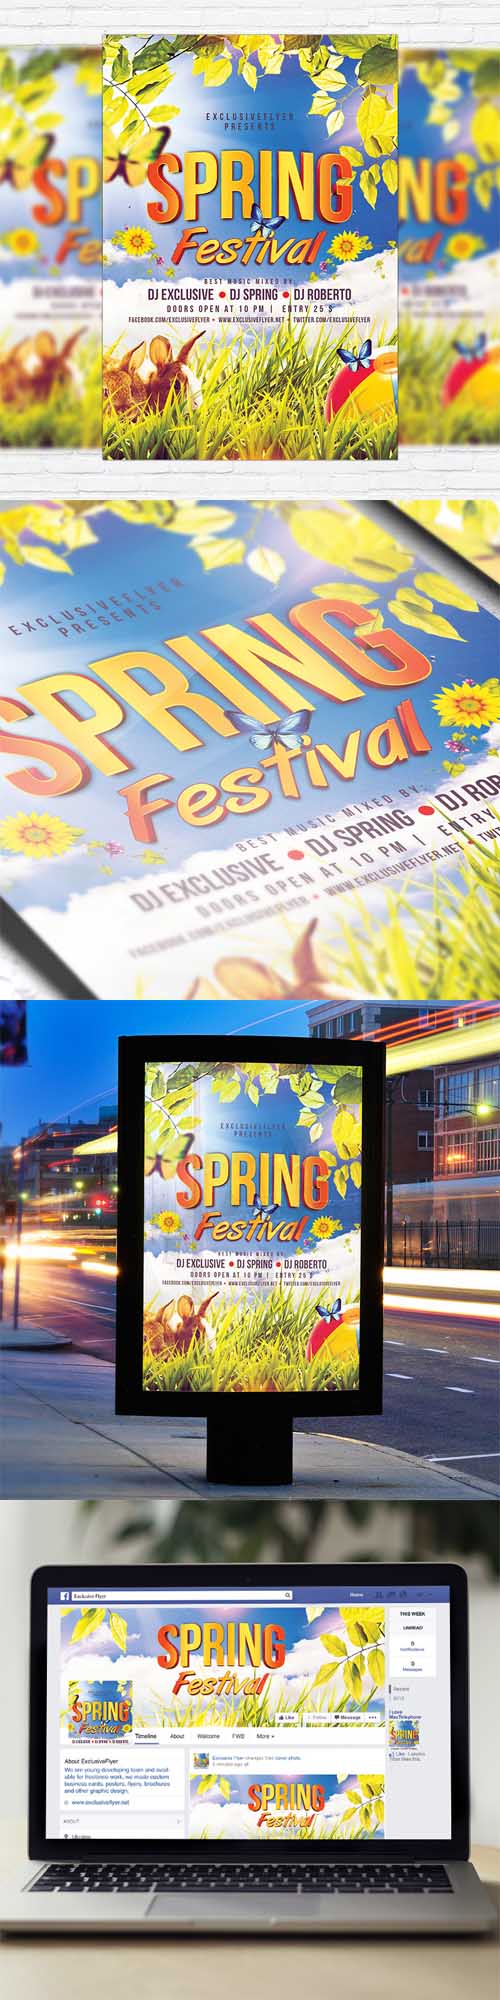 Flyer Template - Spring Festival + Facebook Cover